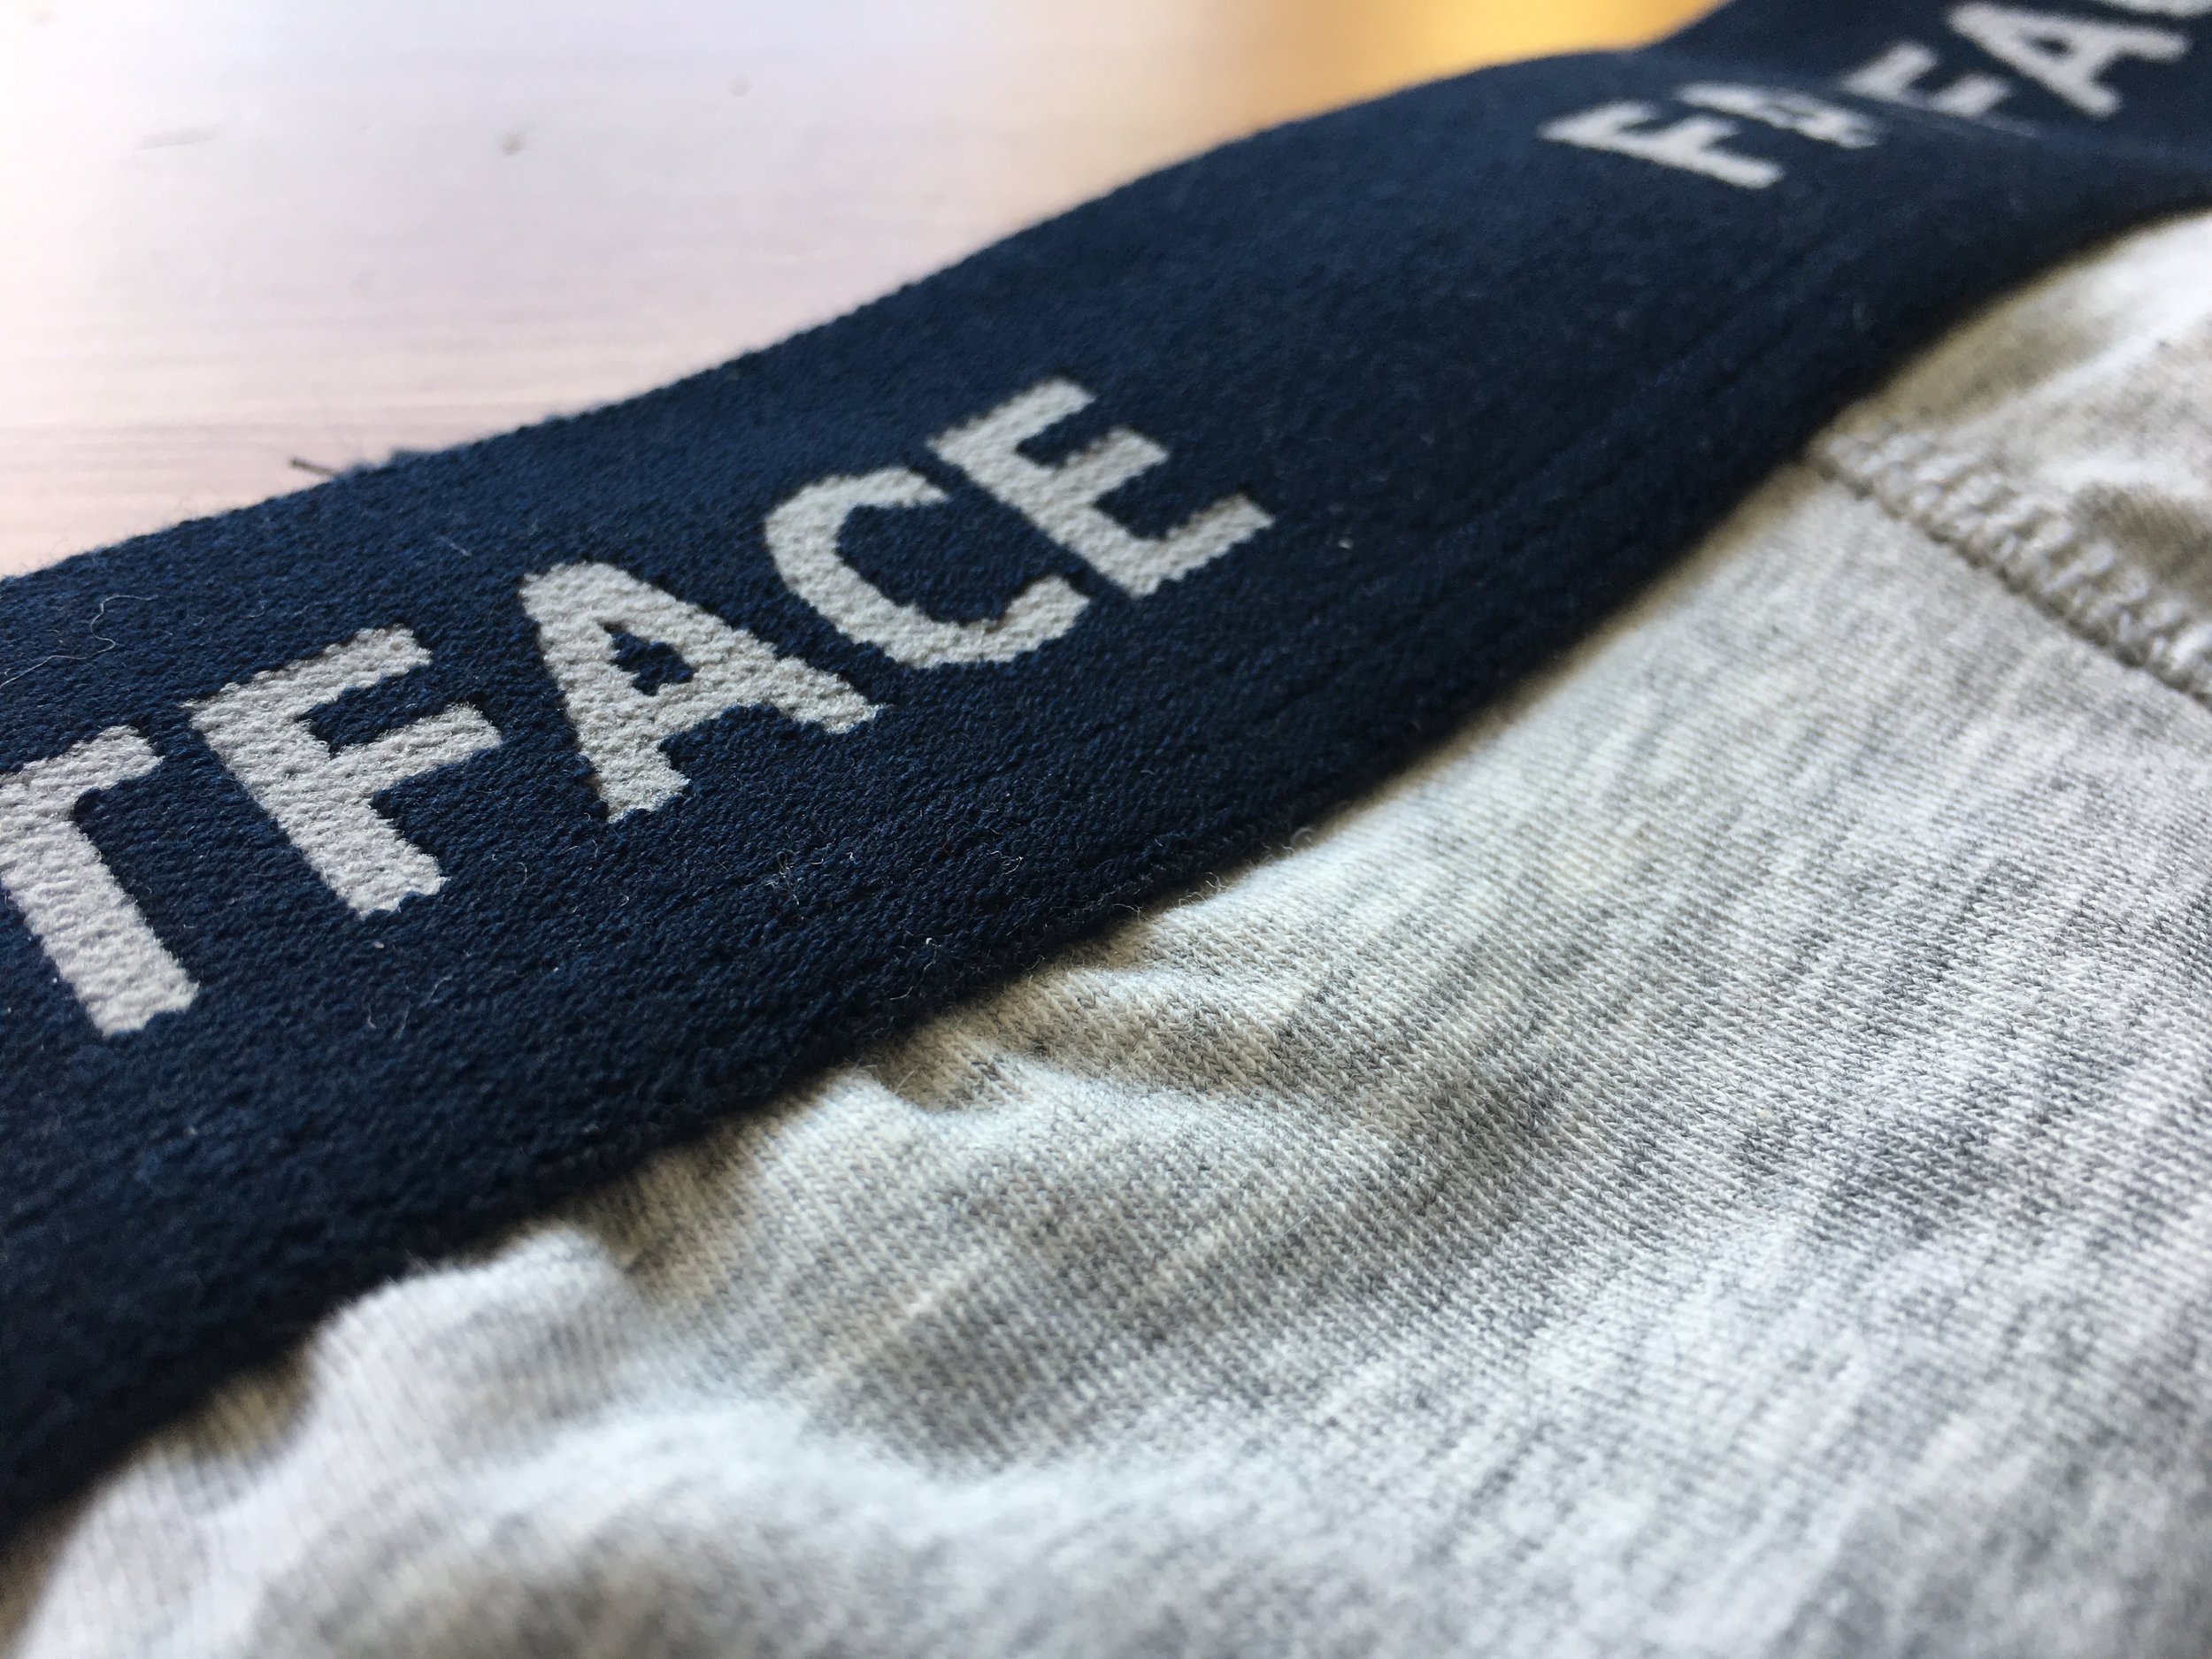 Fat Face Boxer Shorts Underwear for Men — DAPPER & GROOMED